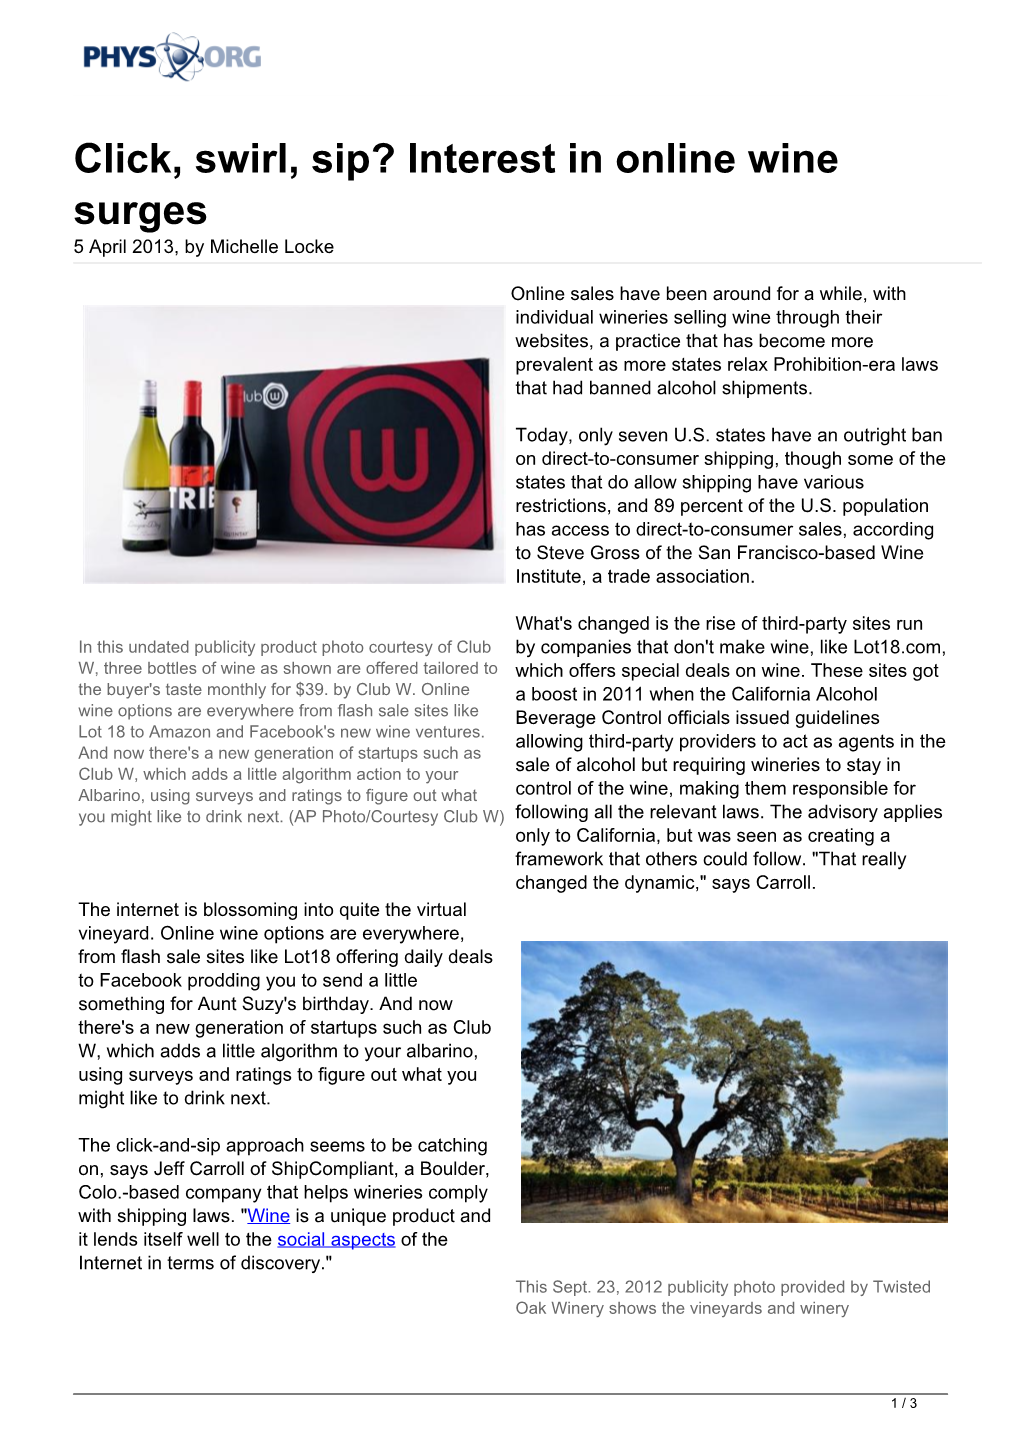 Click, Swirl, Sip? Interest in Online Wine Surges 5 April 2013, by Michelle Locke